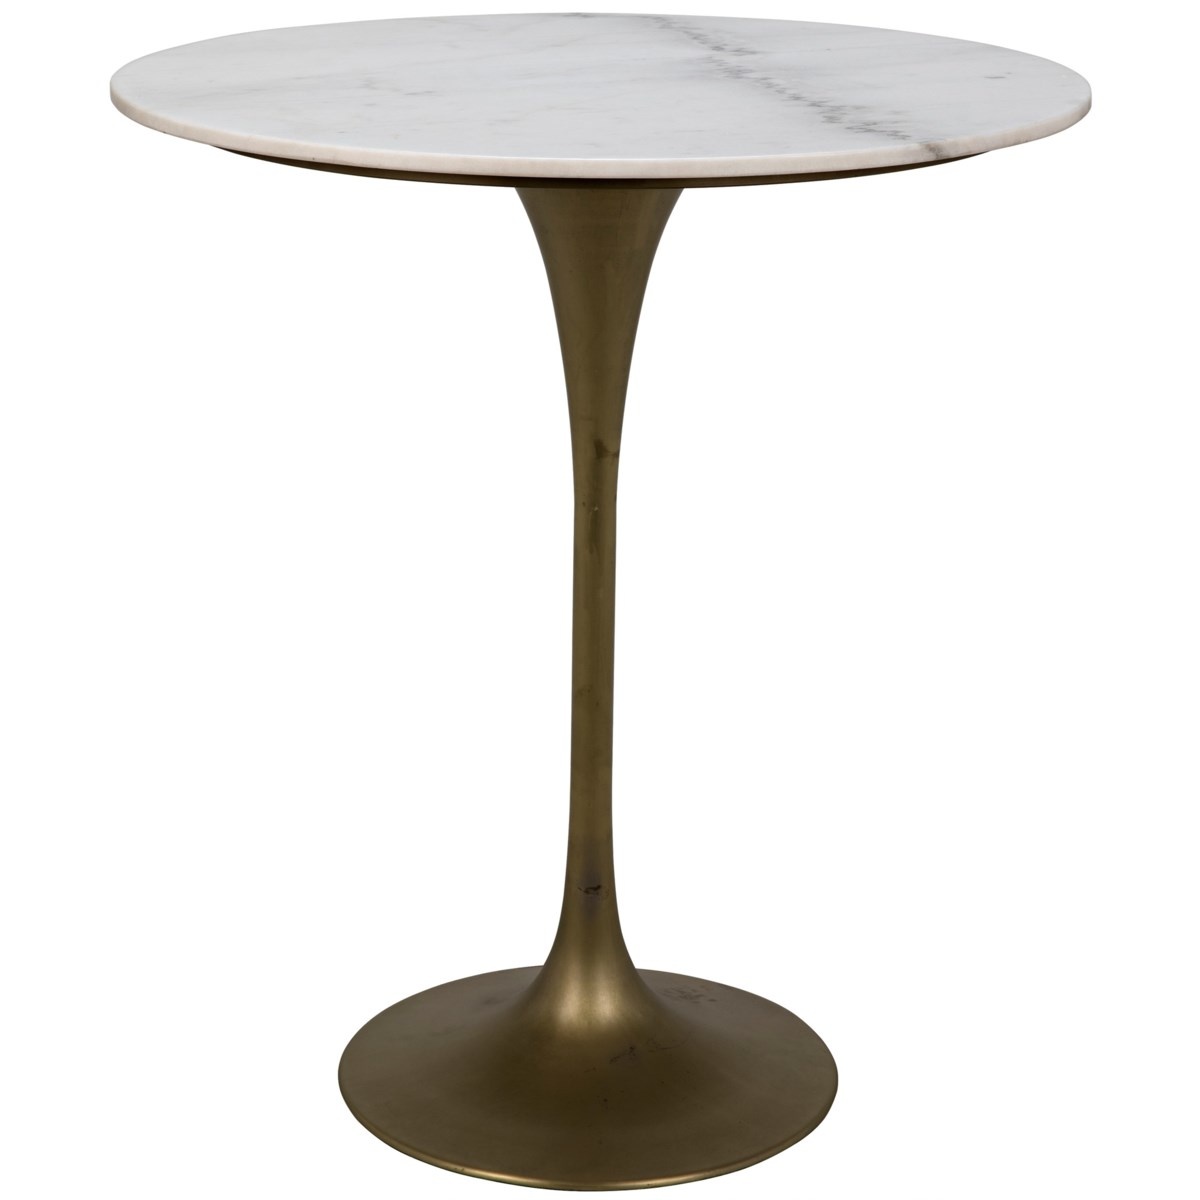 Laredo Table, 36", Antique Brass, White Marble Top